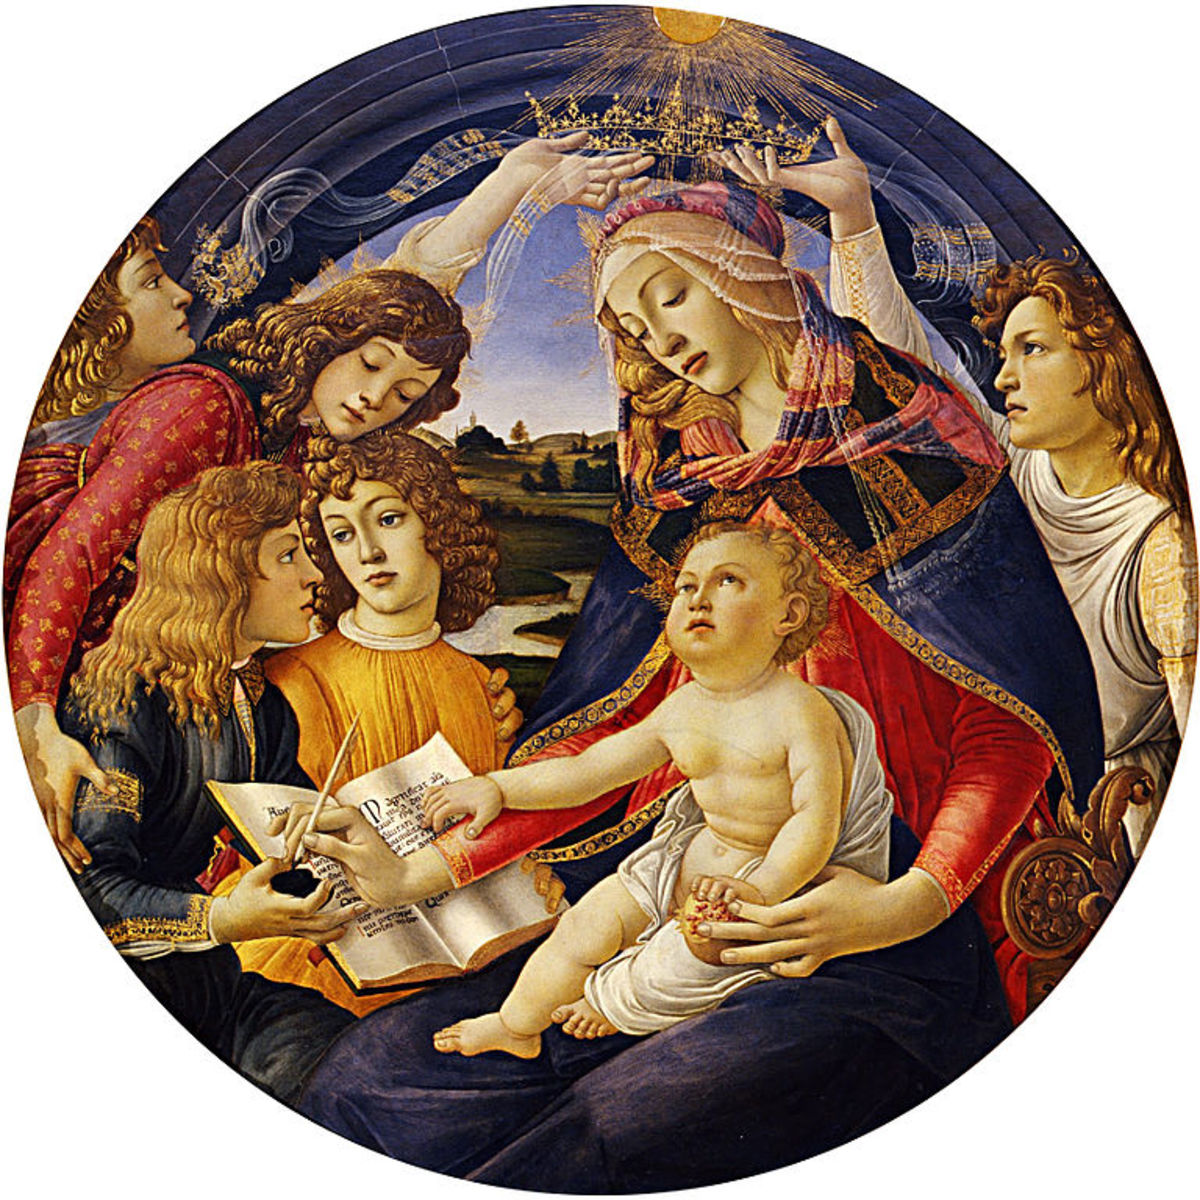 Visual Analysis of Botticelli's 